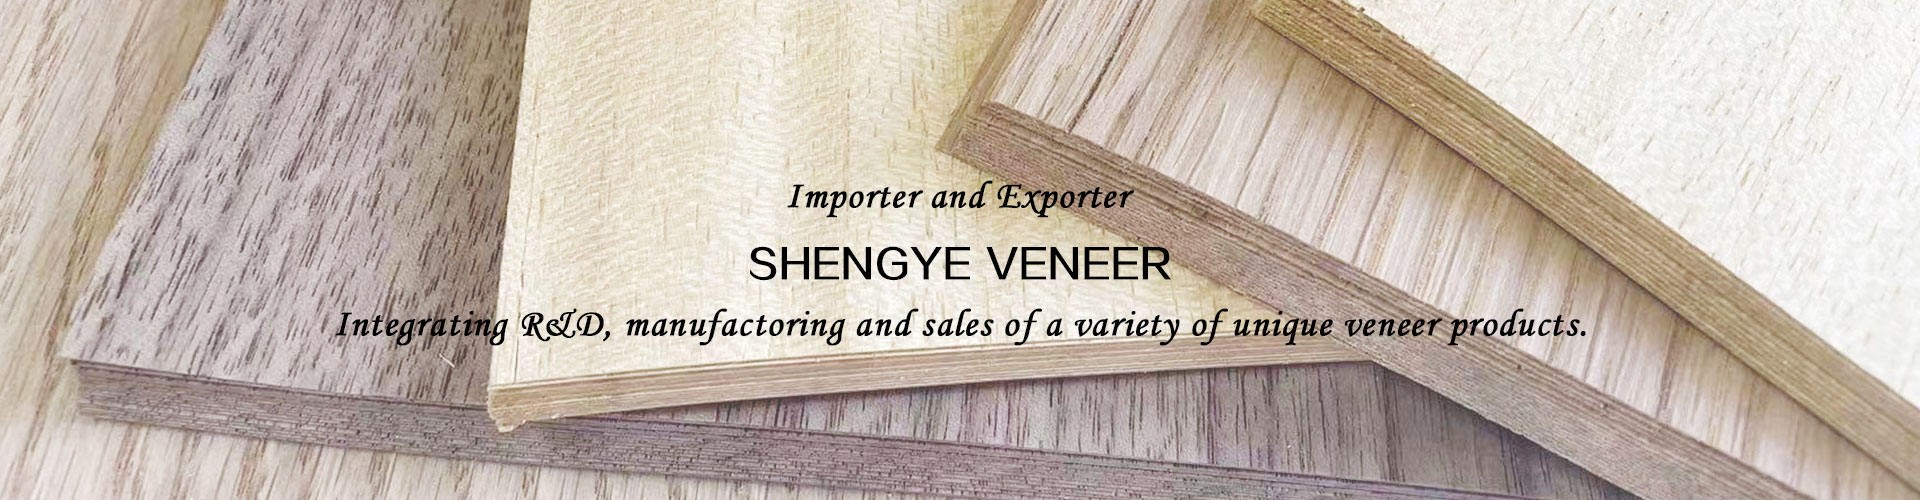 Deqing Shengye Veneer Co., Ltd.